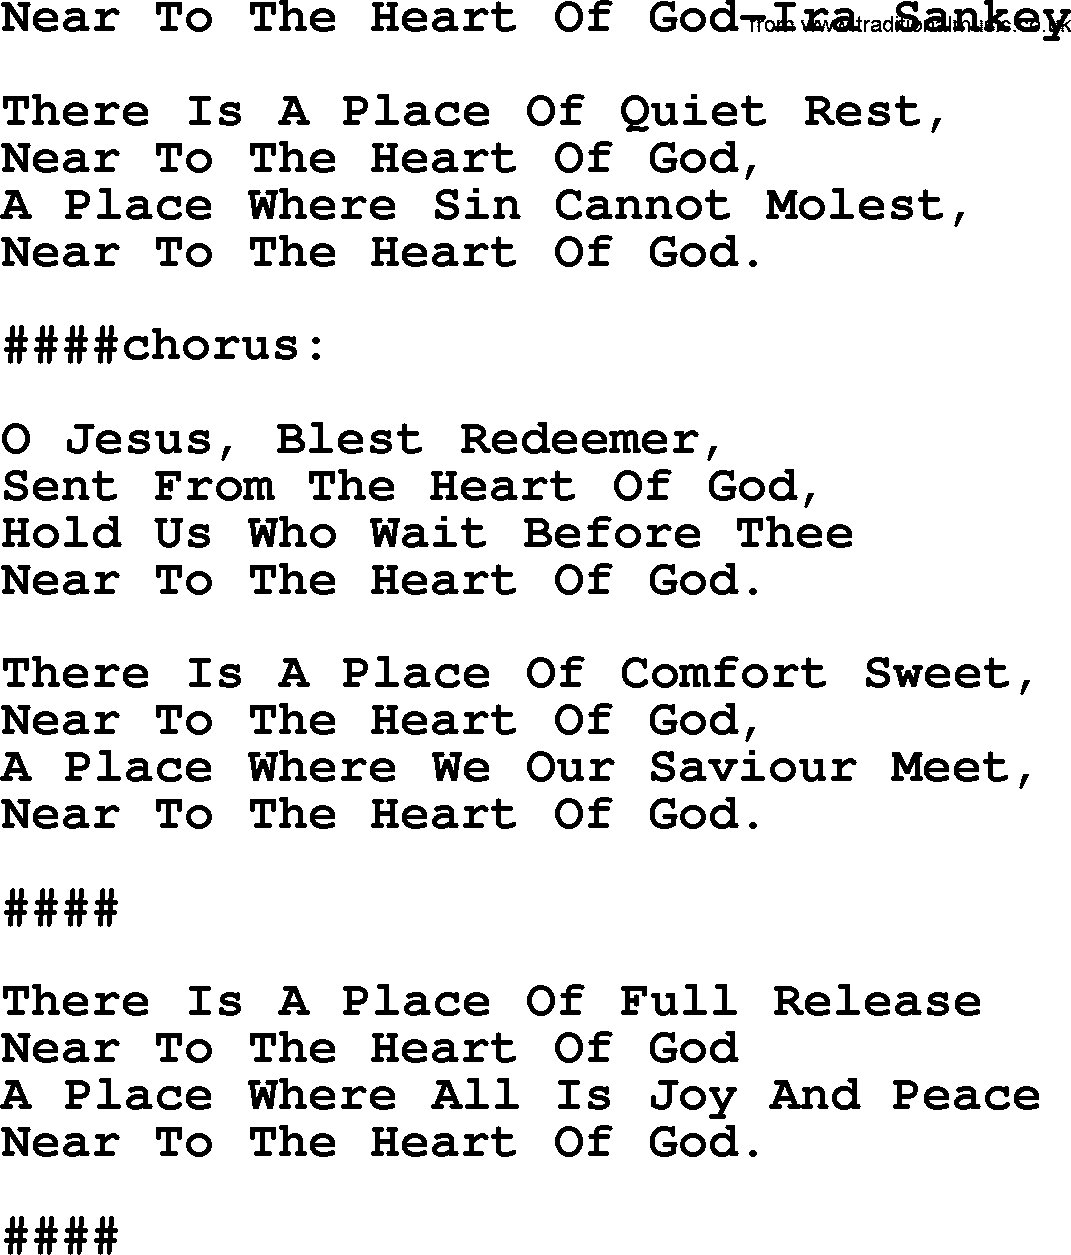 Ira Sankey hymn: Near To The Heart Of God-Ira Sankey, lyrics